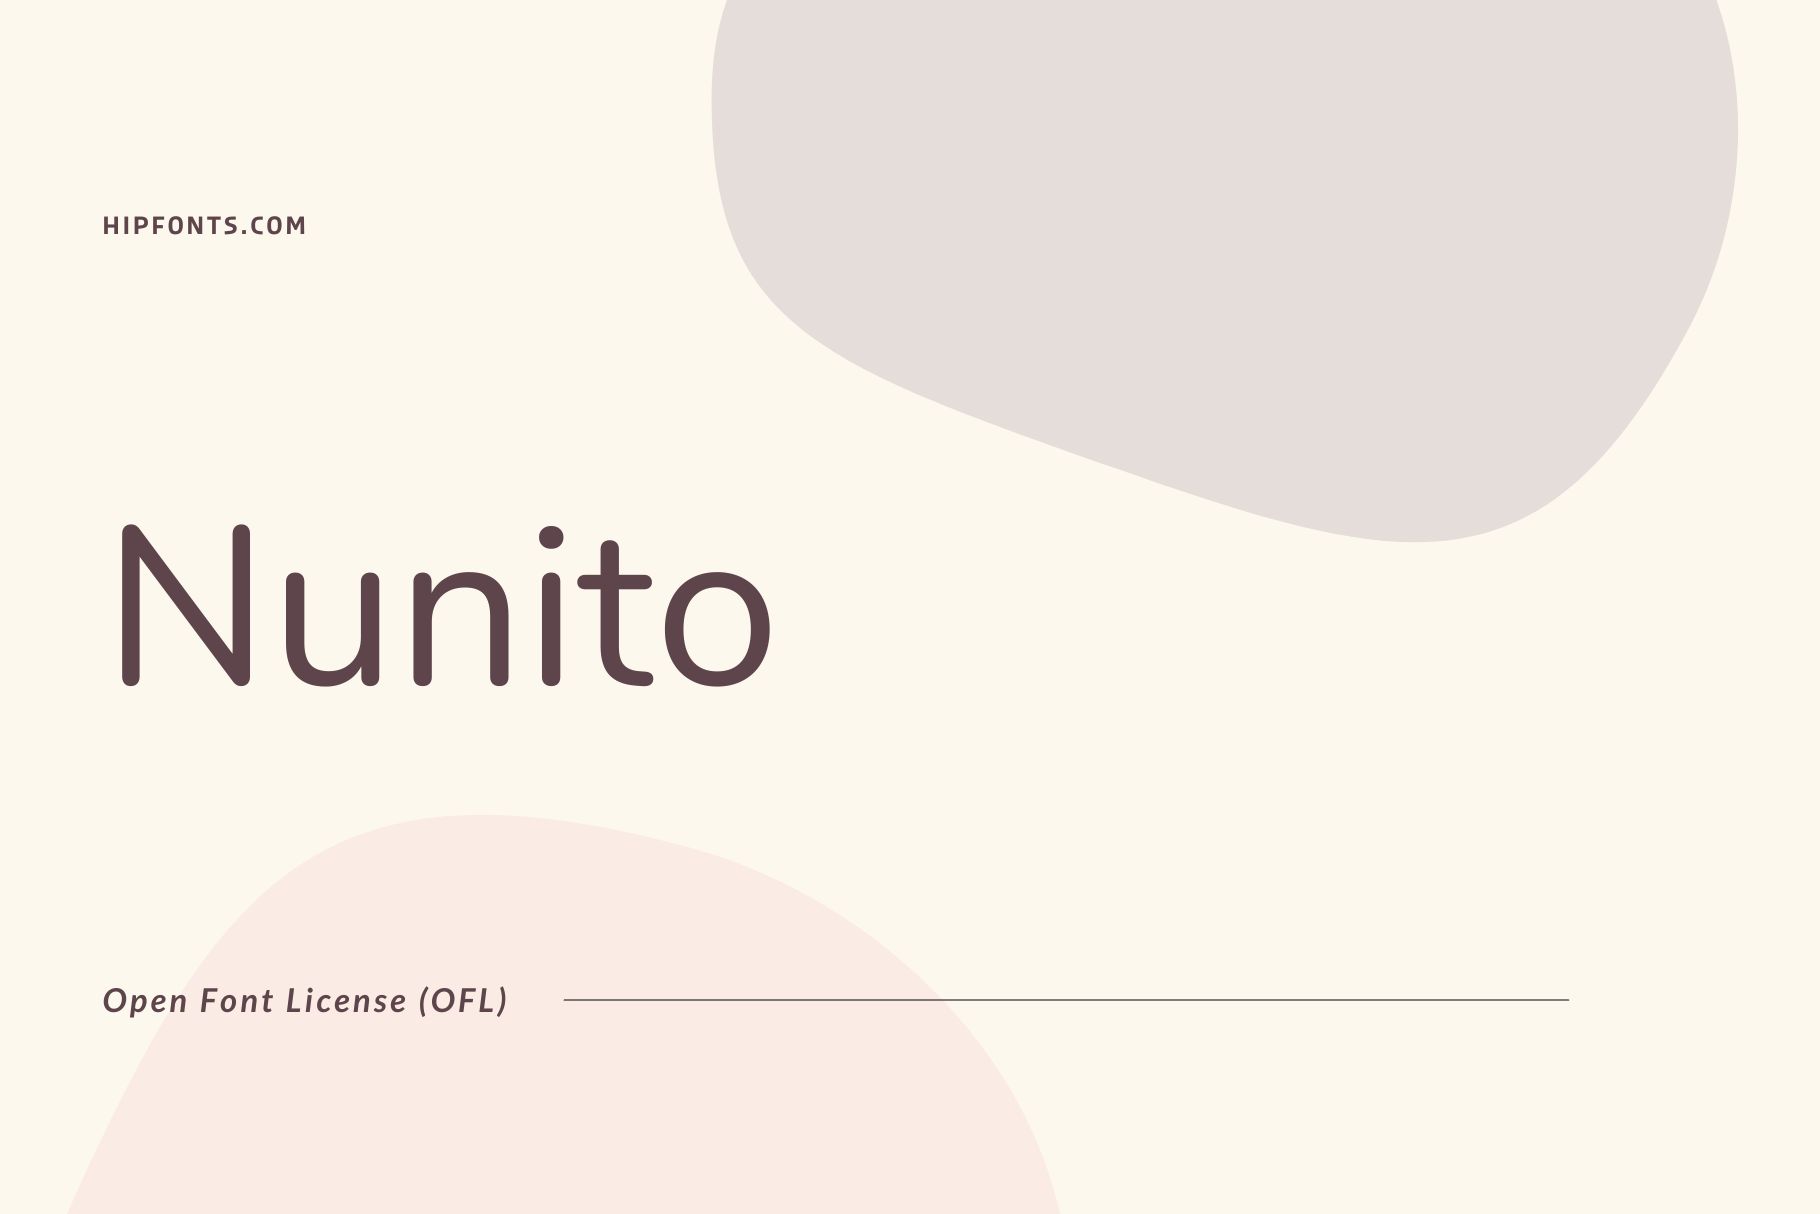 Nunito free font